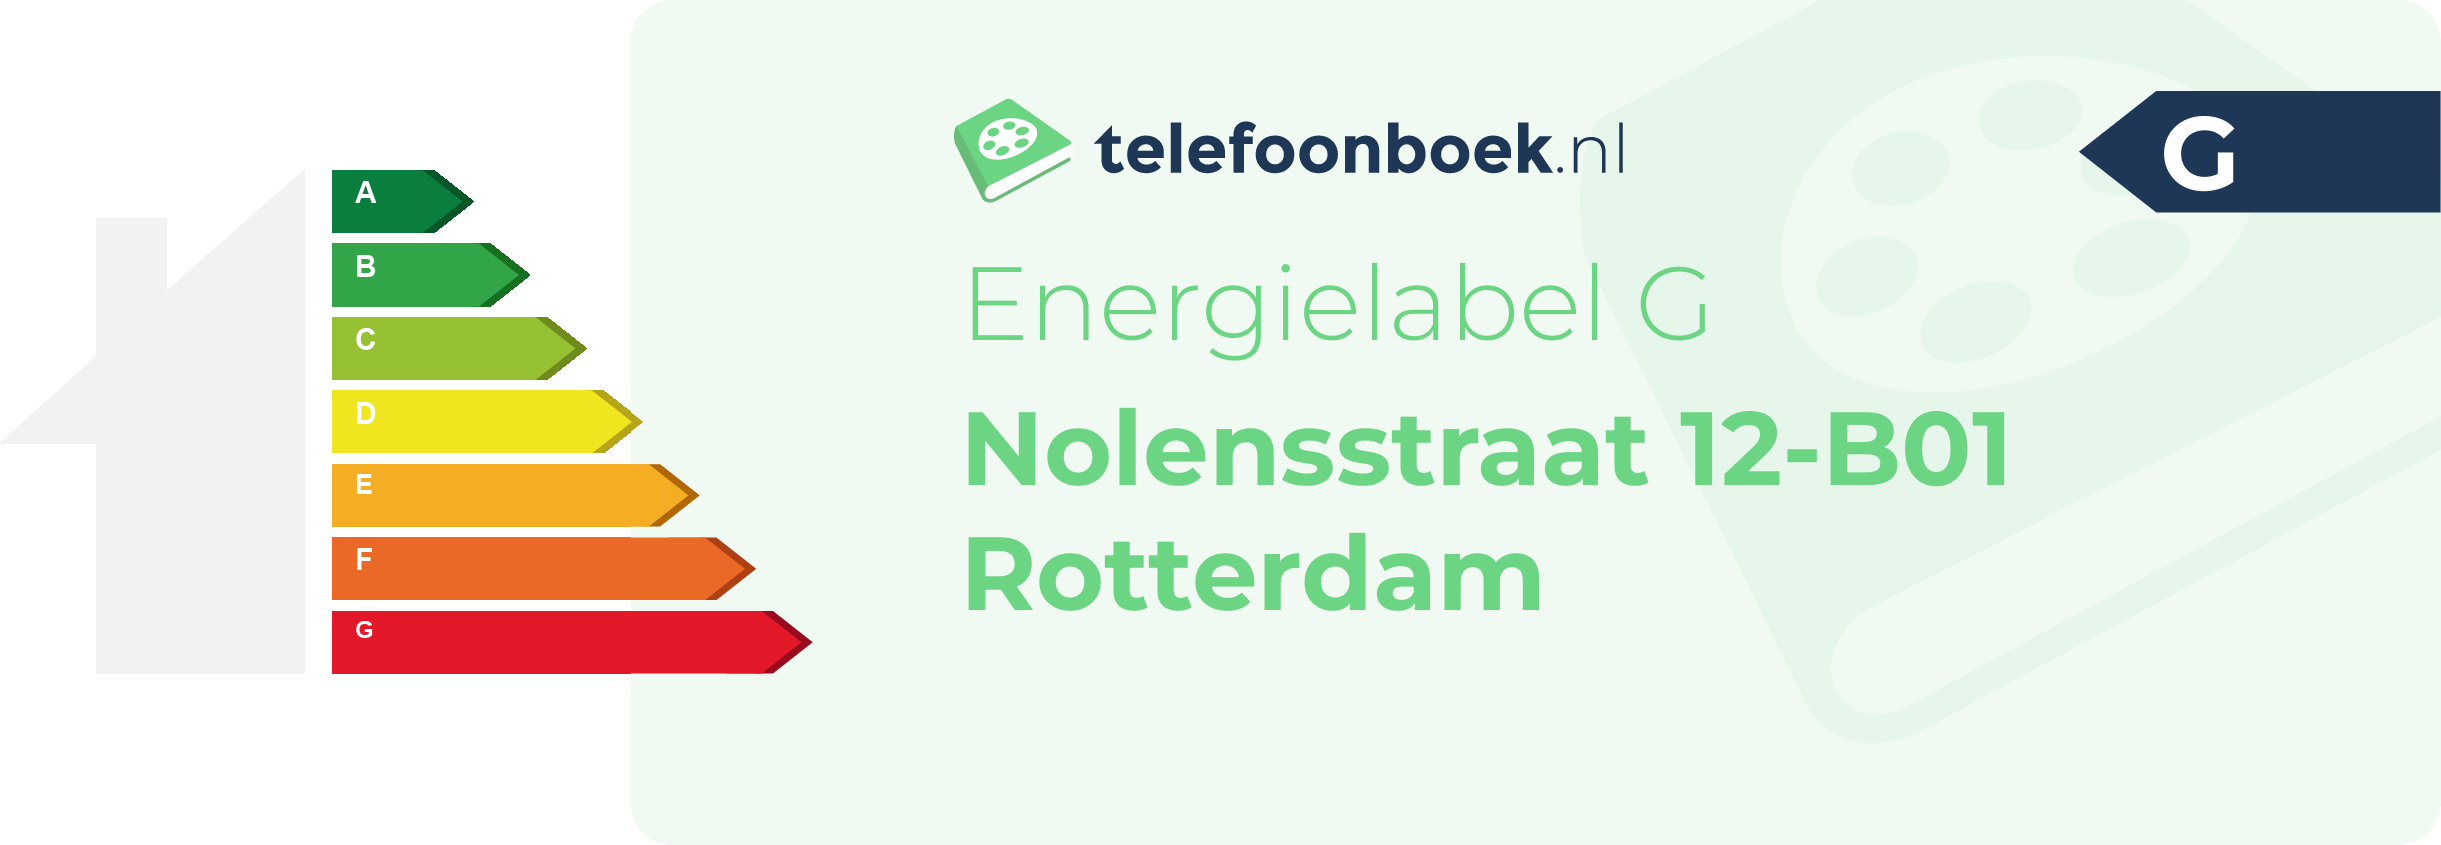 Energielabel Nolensstraat 12-B01 Rotterdam